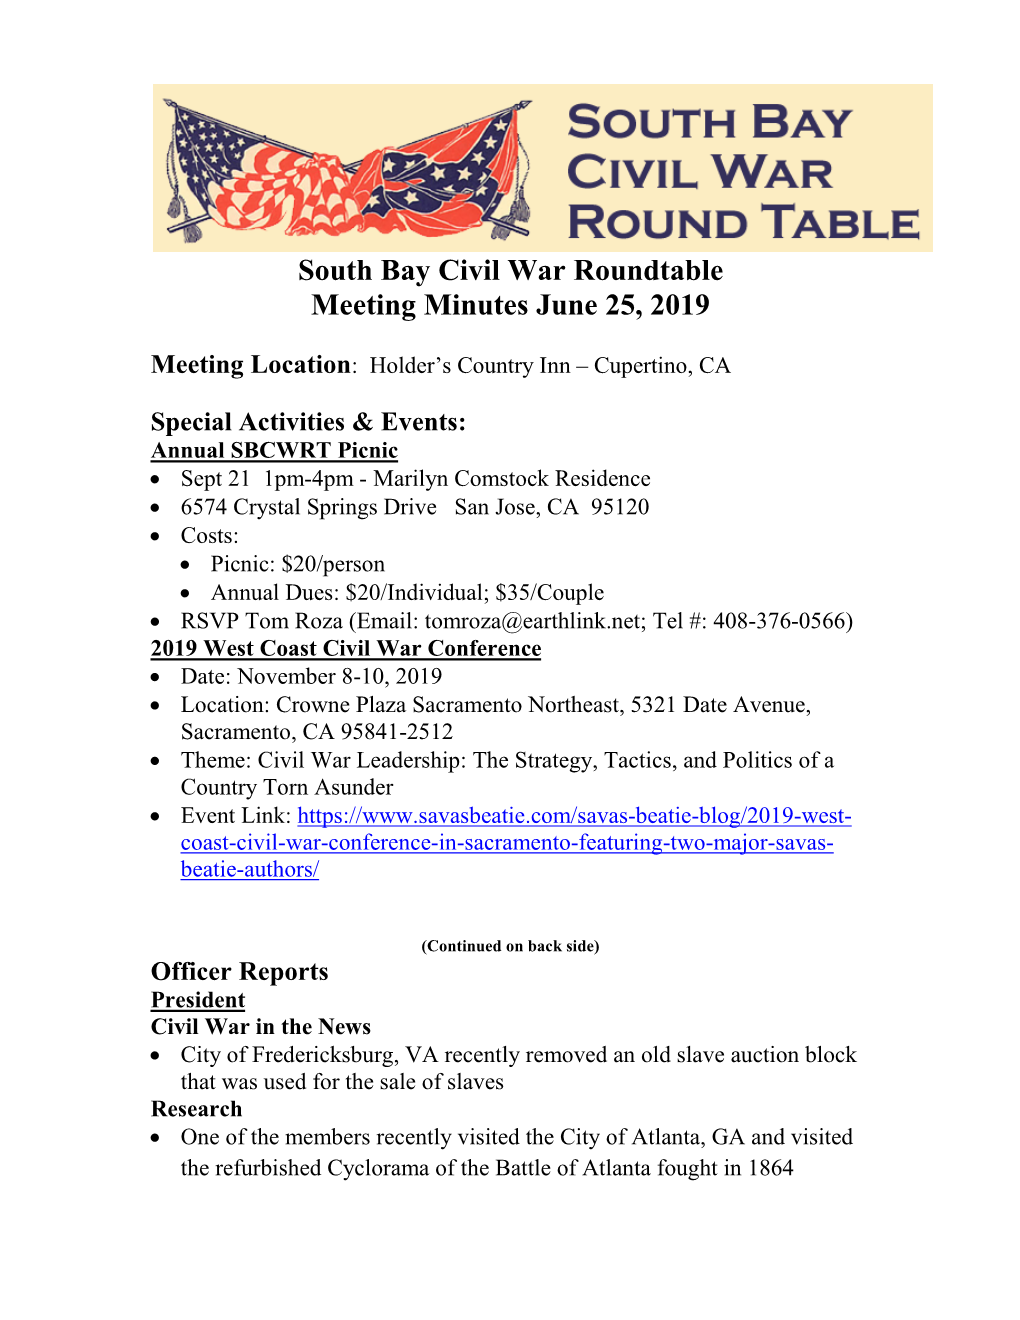 Meeting-Minutes-June-2019